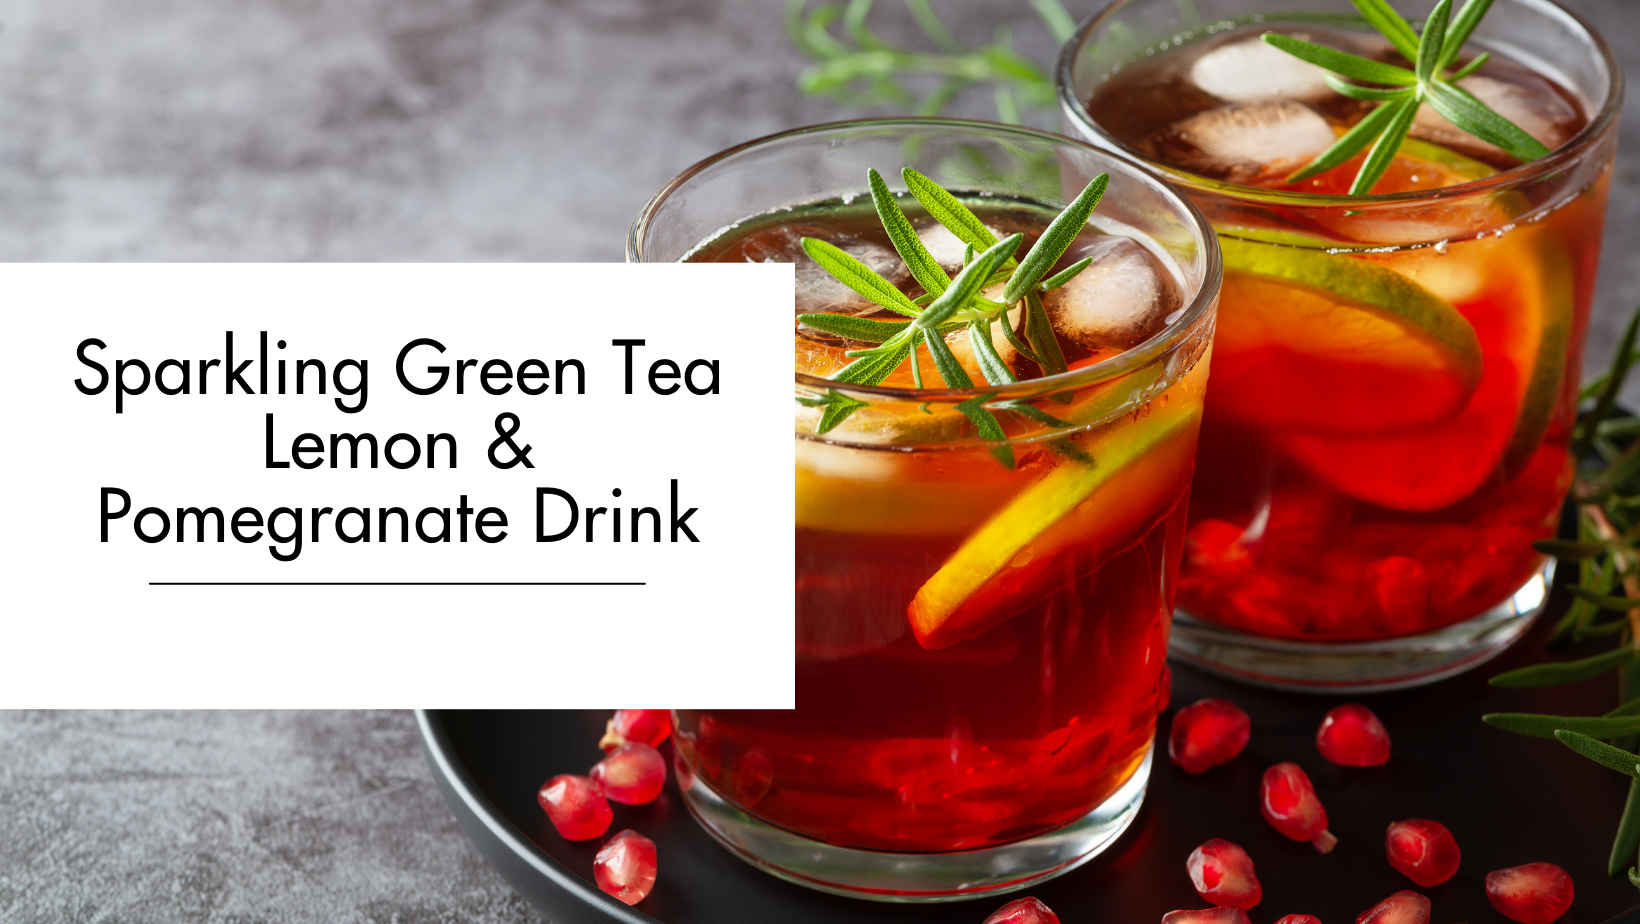 Sparkling Green Tea Lemon & Pomegranate Drink